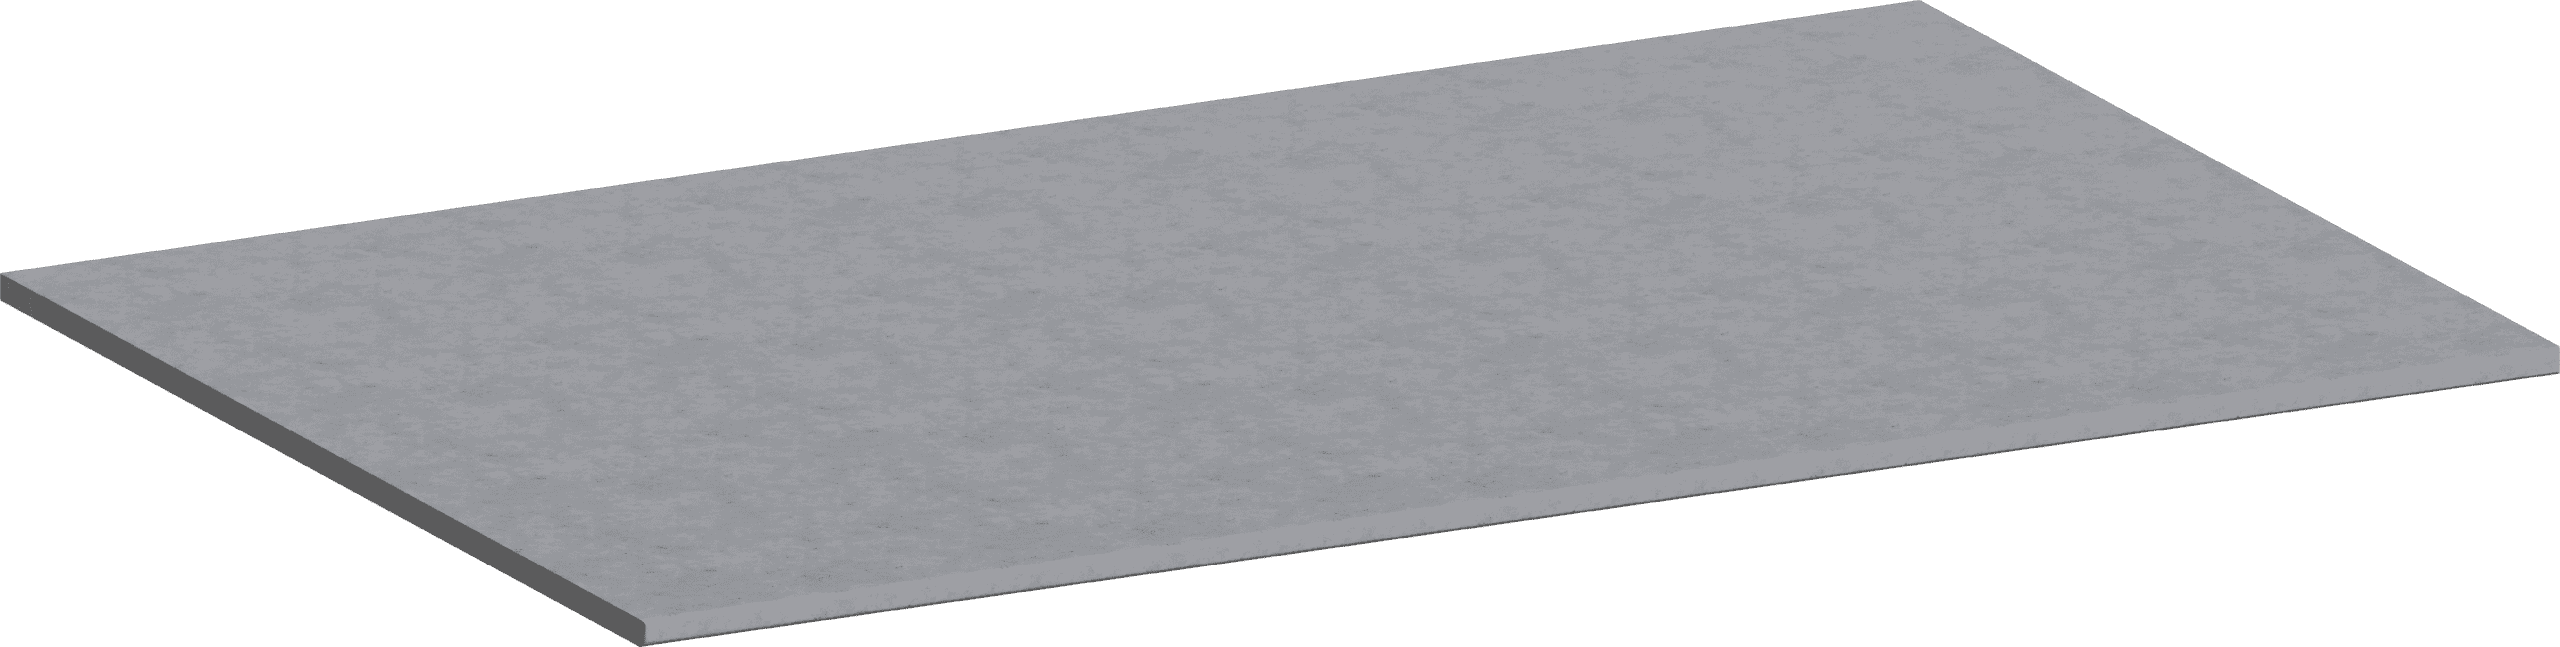 Virginia garage floor coating base coat